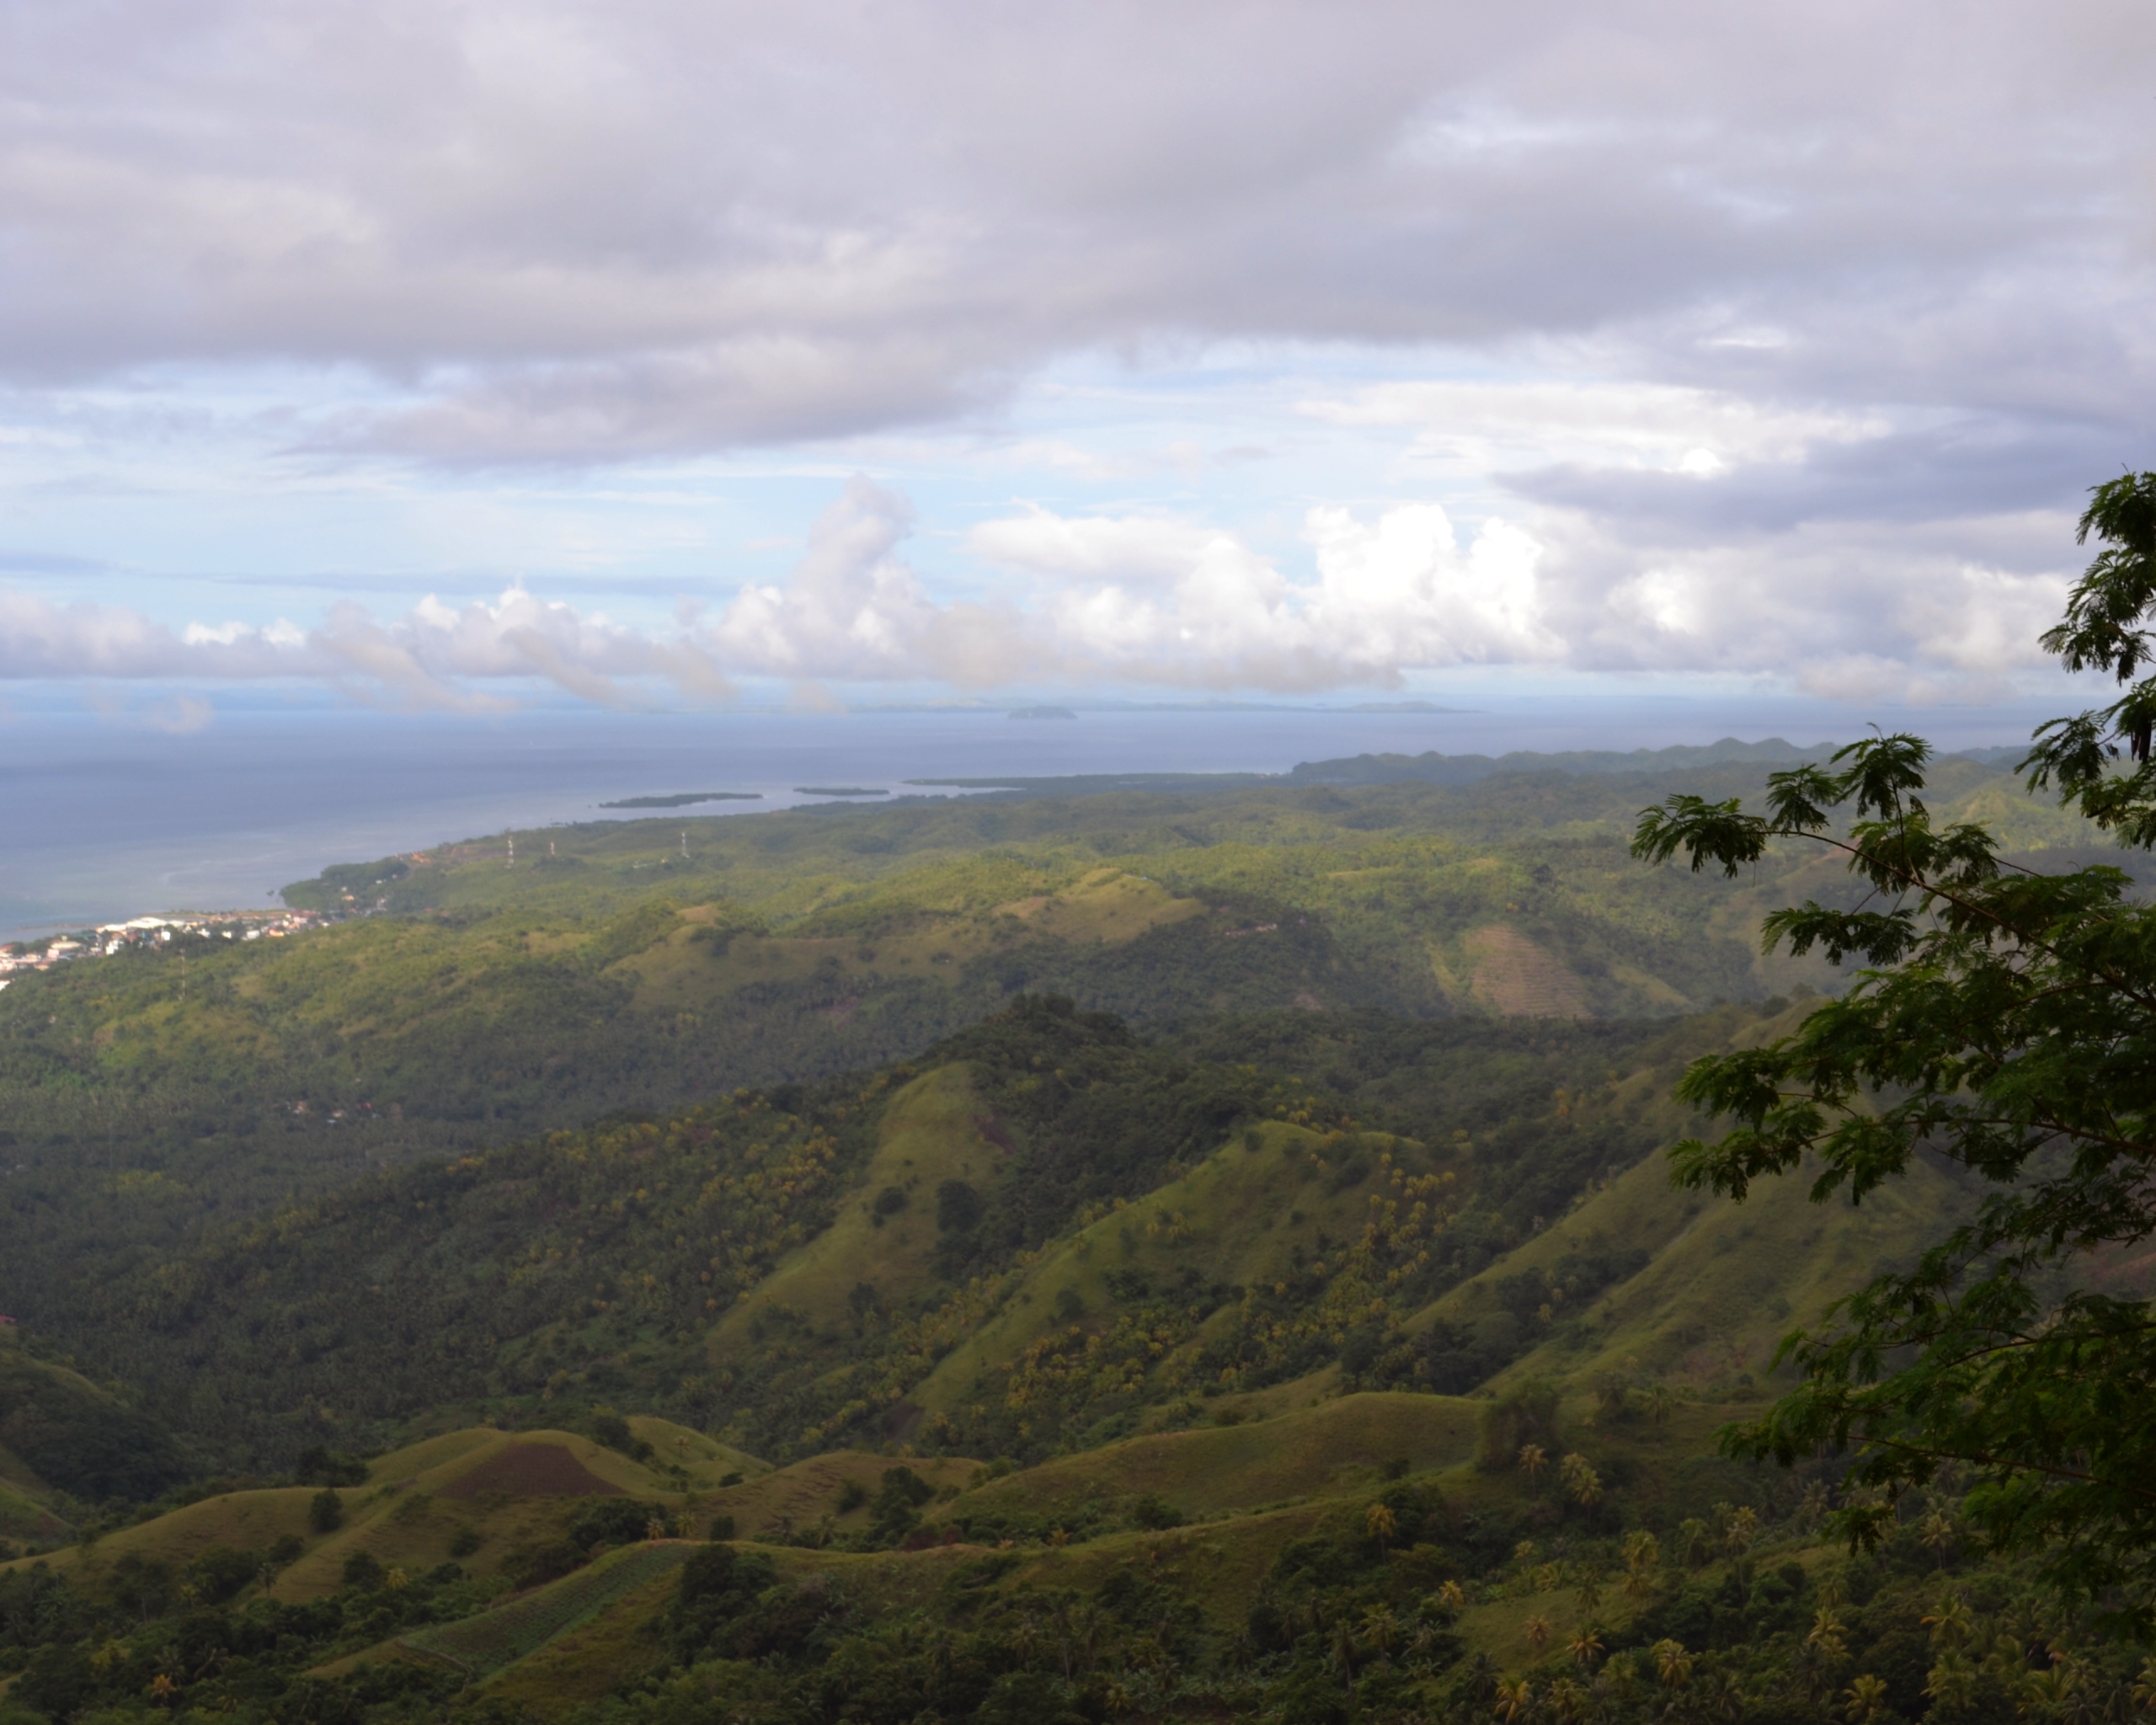 Hanginan Views, Maasin, Leyte, Philippines, 259-54